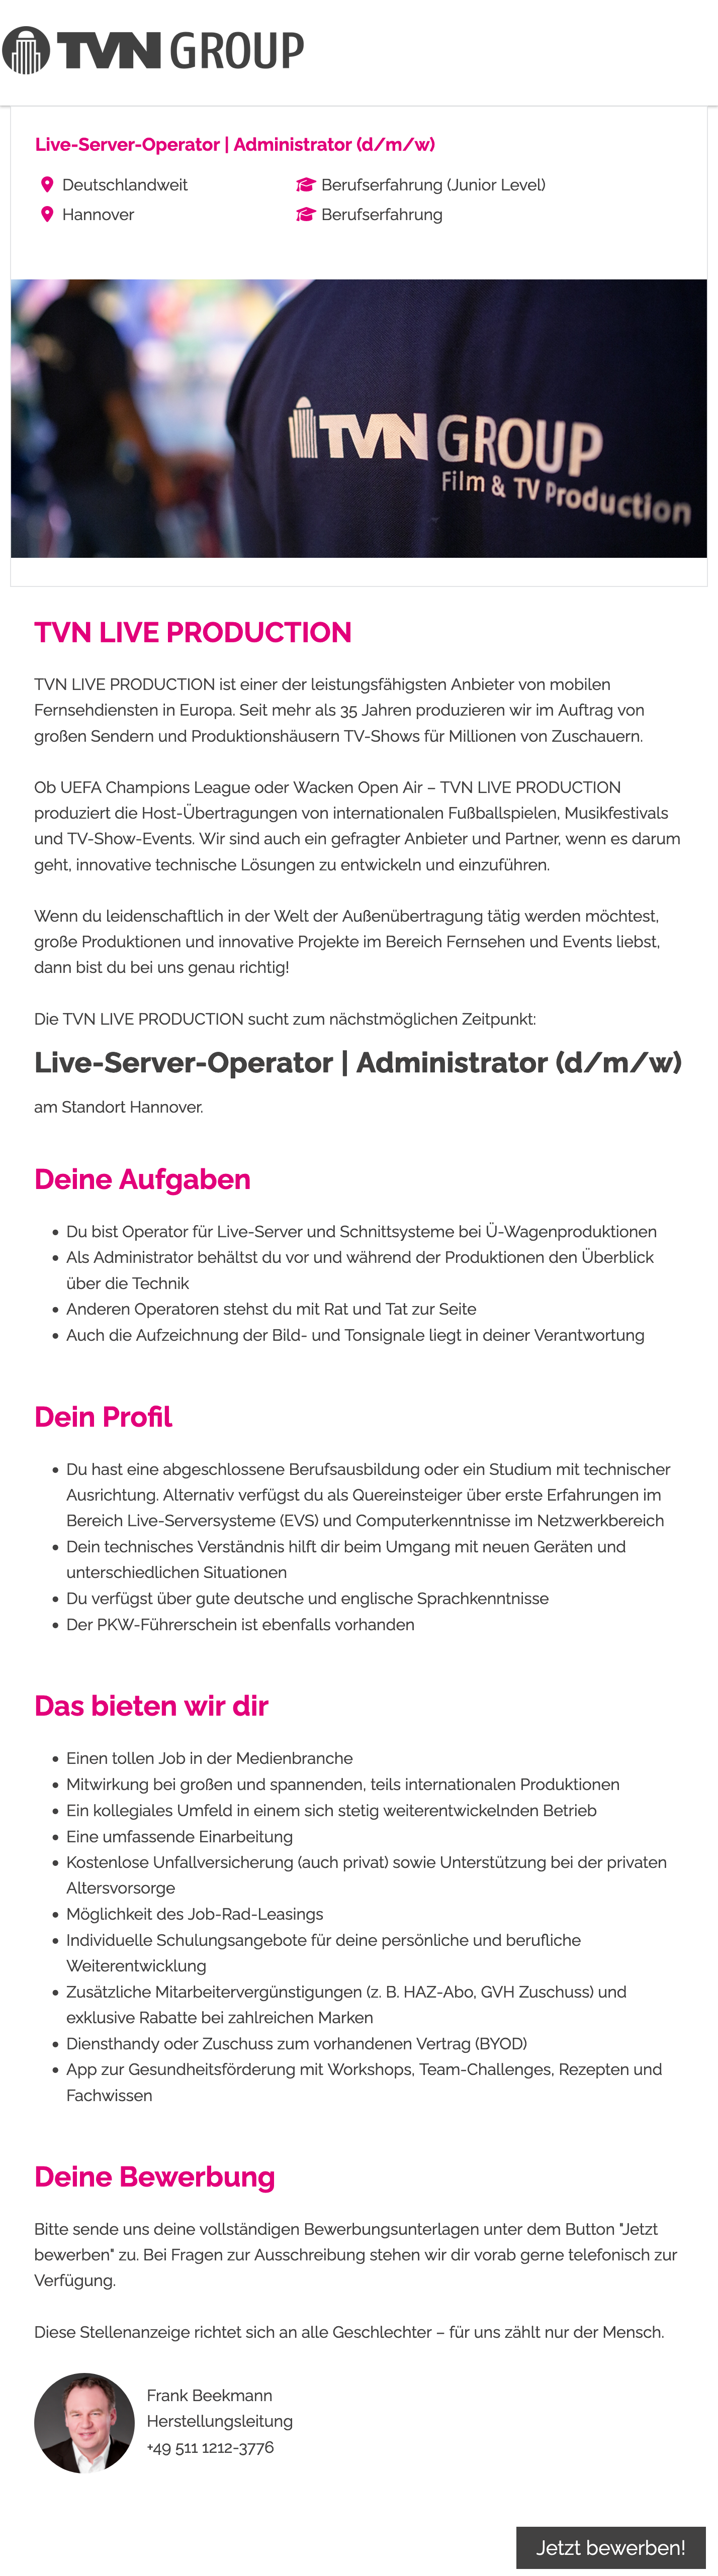 Live-Server-Operator / Administrator (d/m/w)